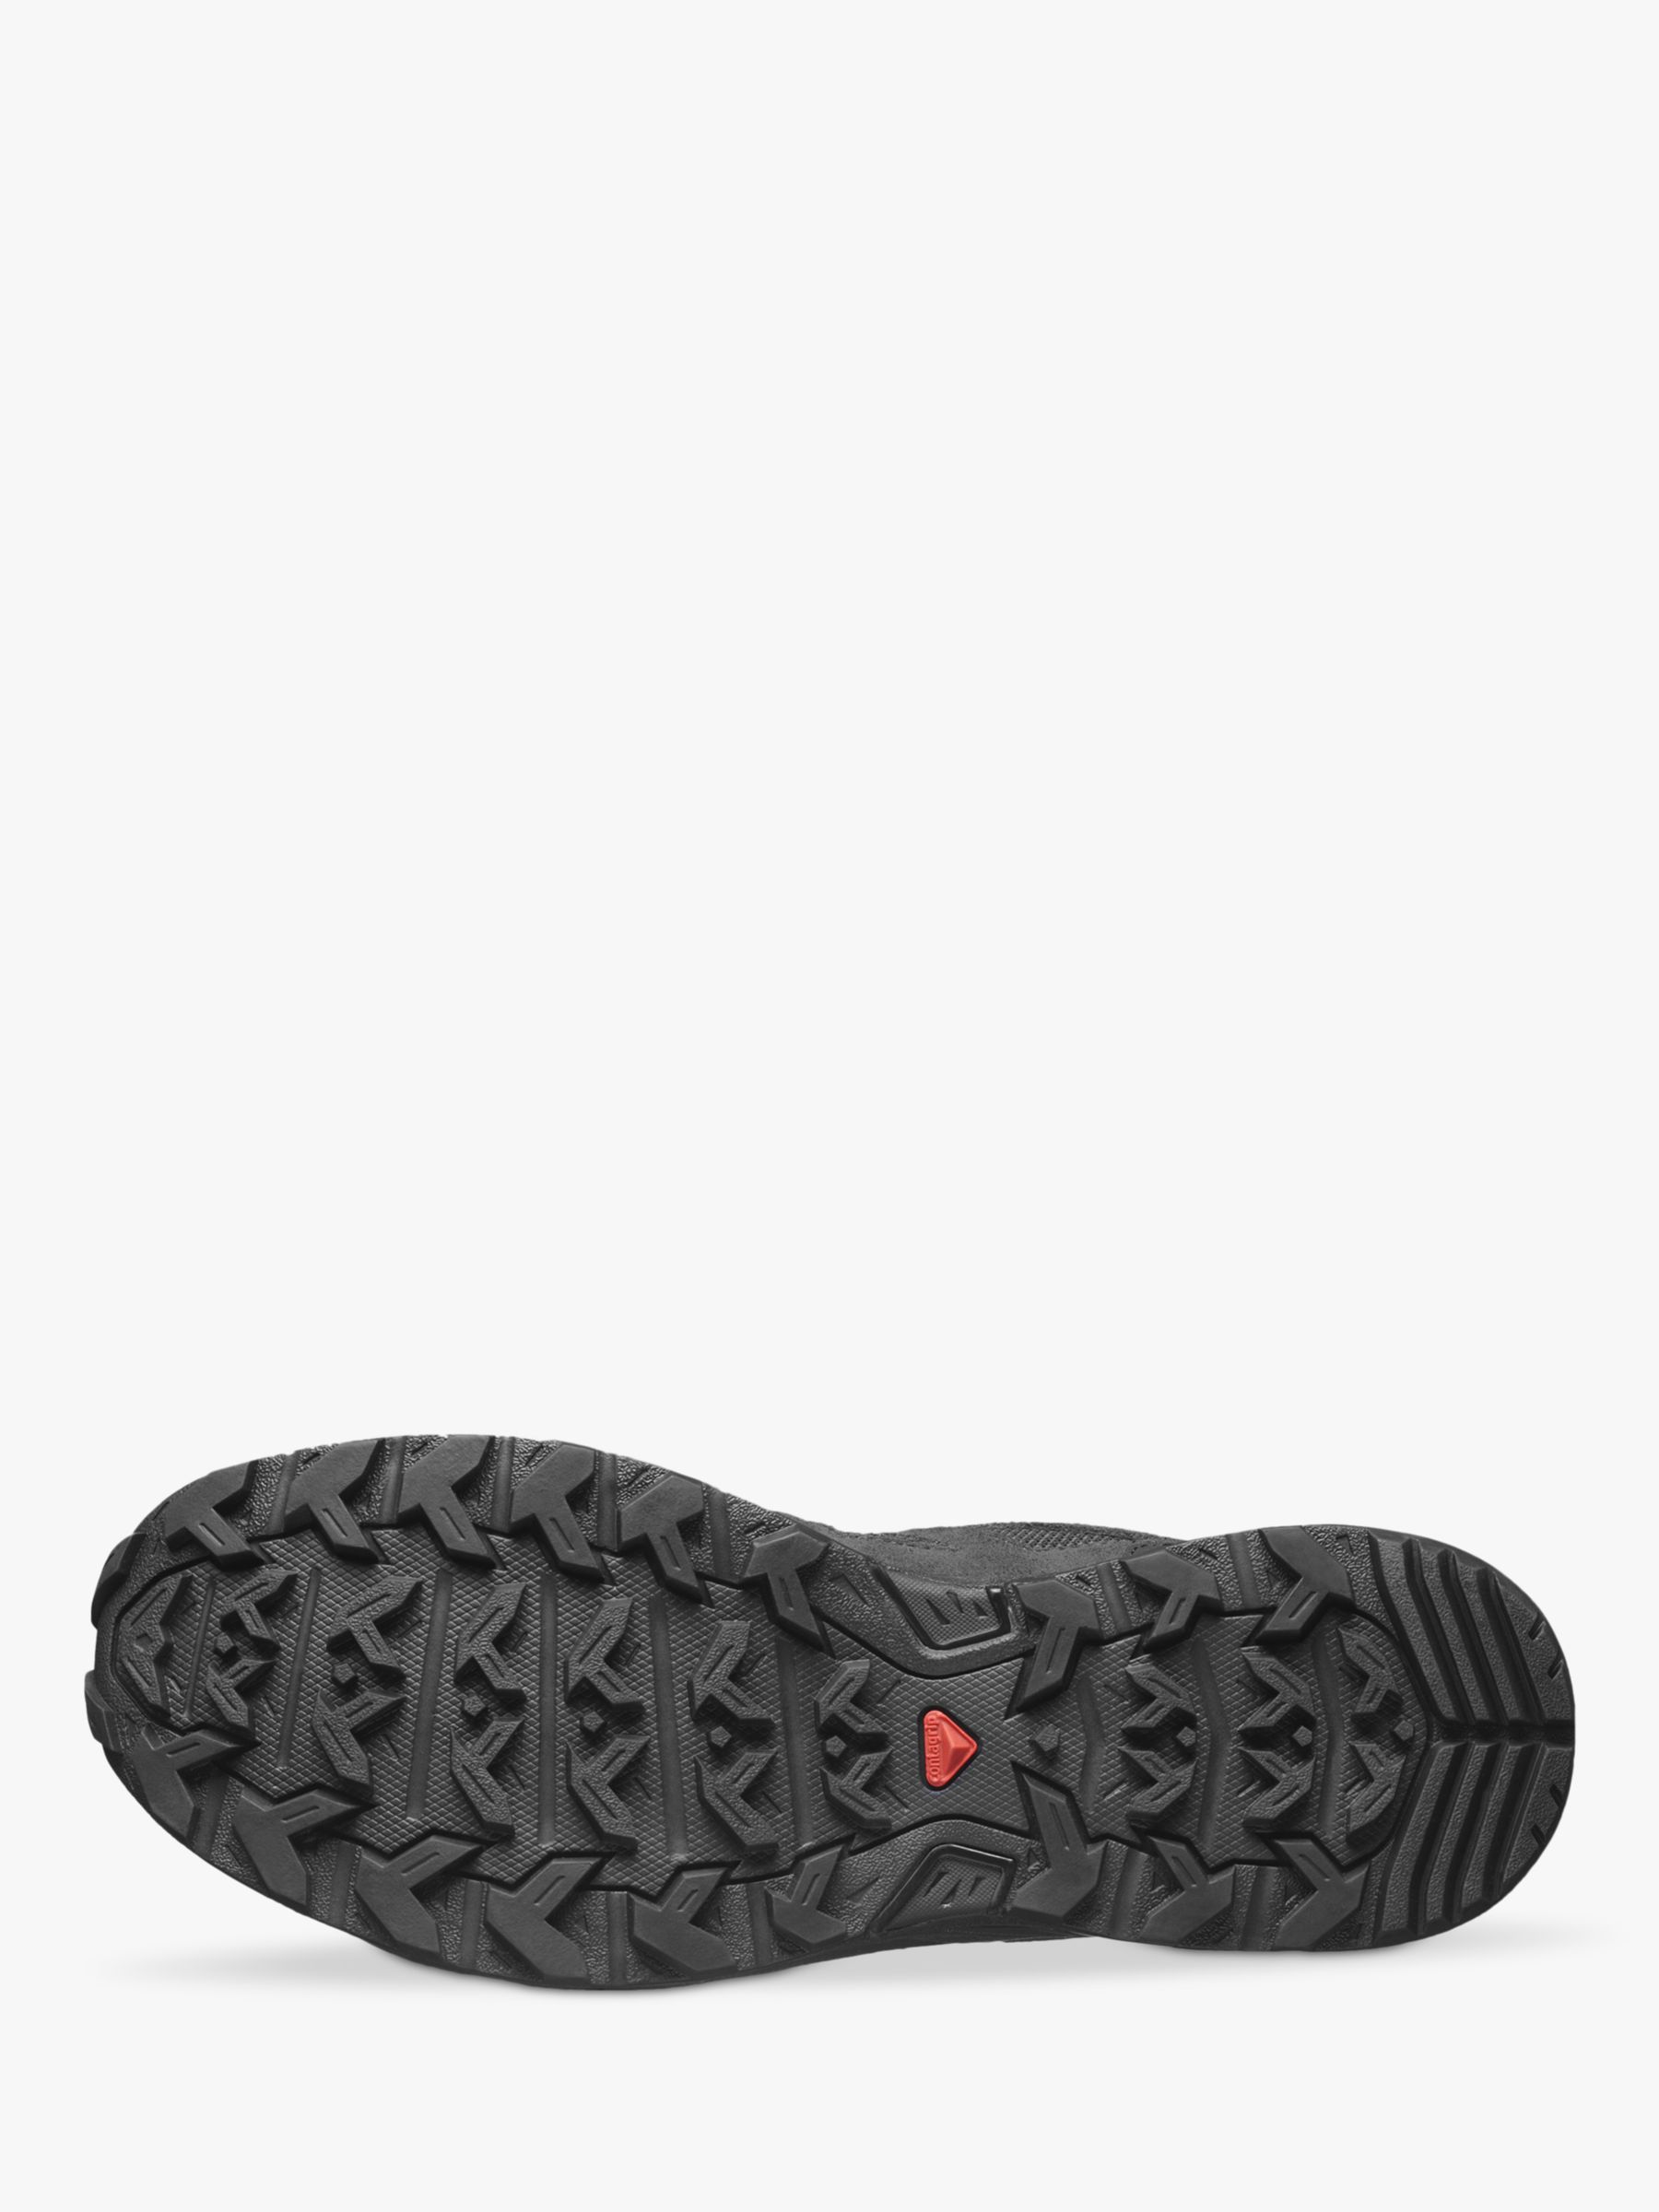 Salomon X Ward Leather Gore-Tex Men's Trail Shoes, Black, 9